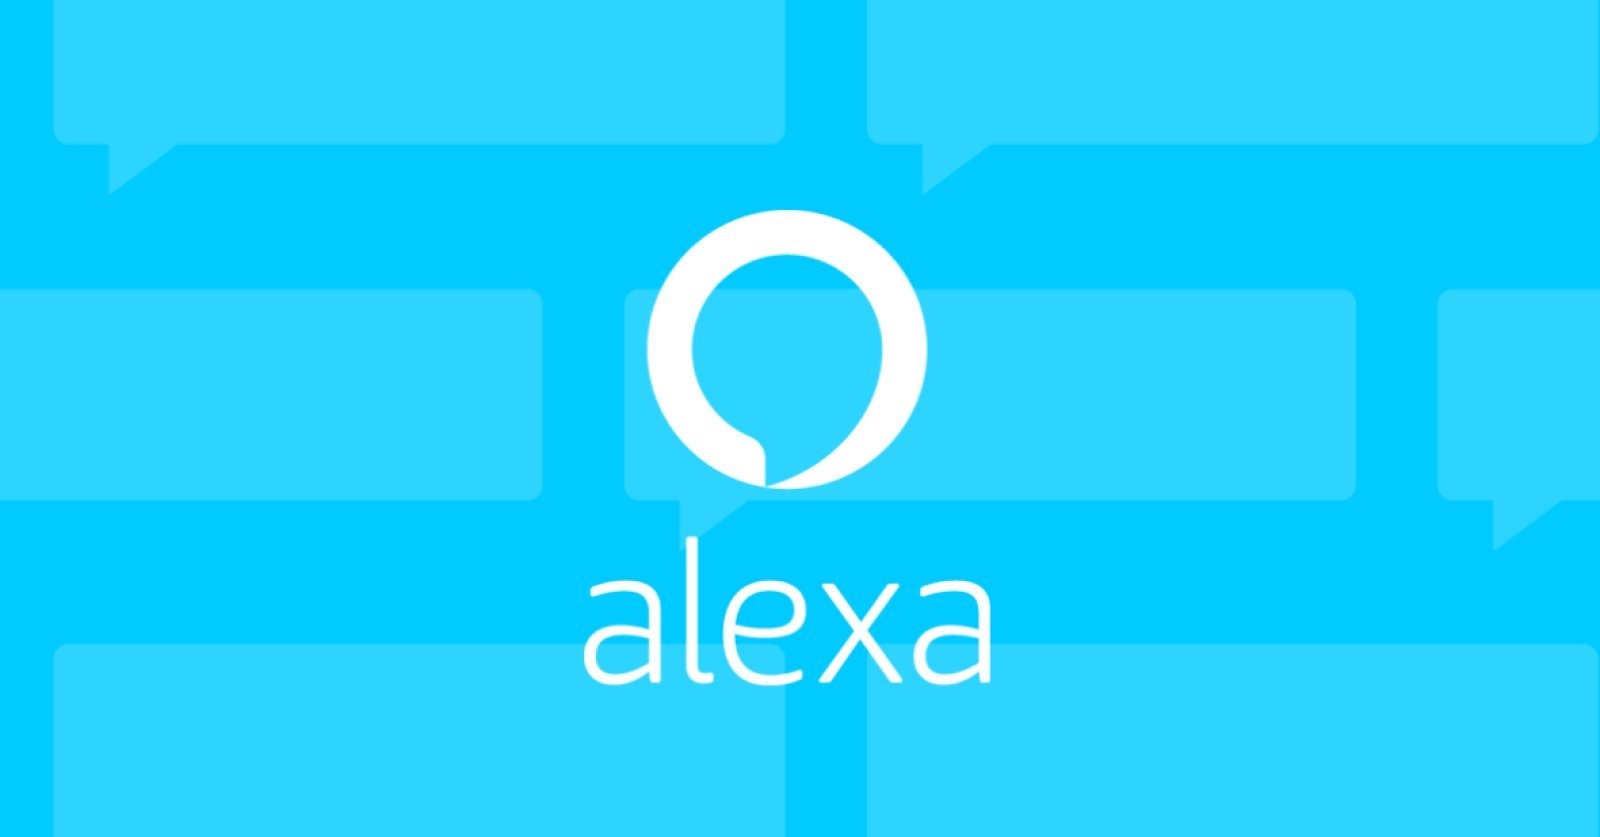 alexa.amazon.com free app download for pc